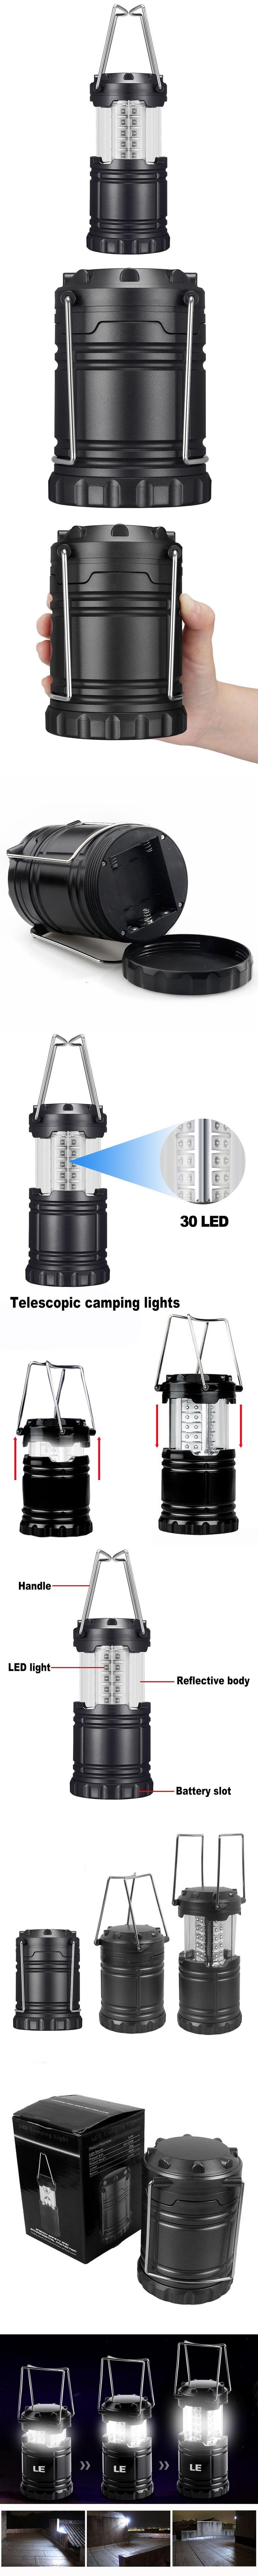 30 LED Tent Light Camping Hiking Equipment Outdoor Portable Lamp Lantern B4